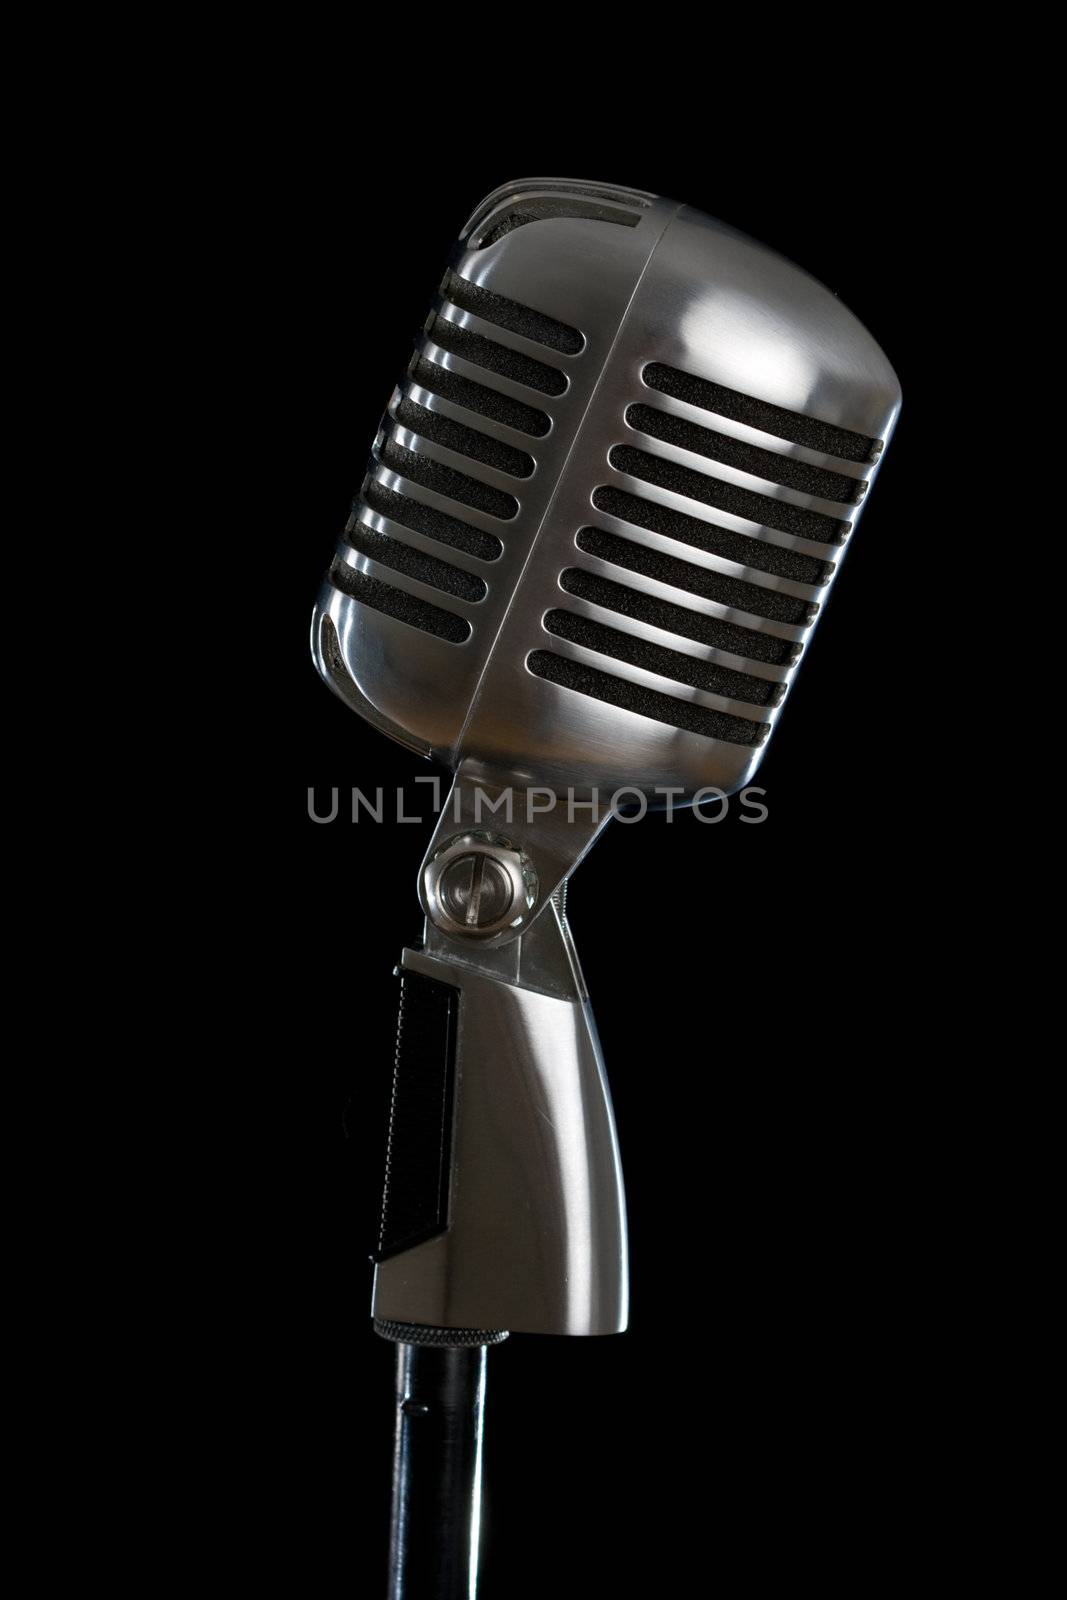 Retro microphone by mihhailov